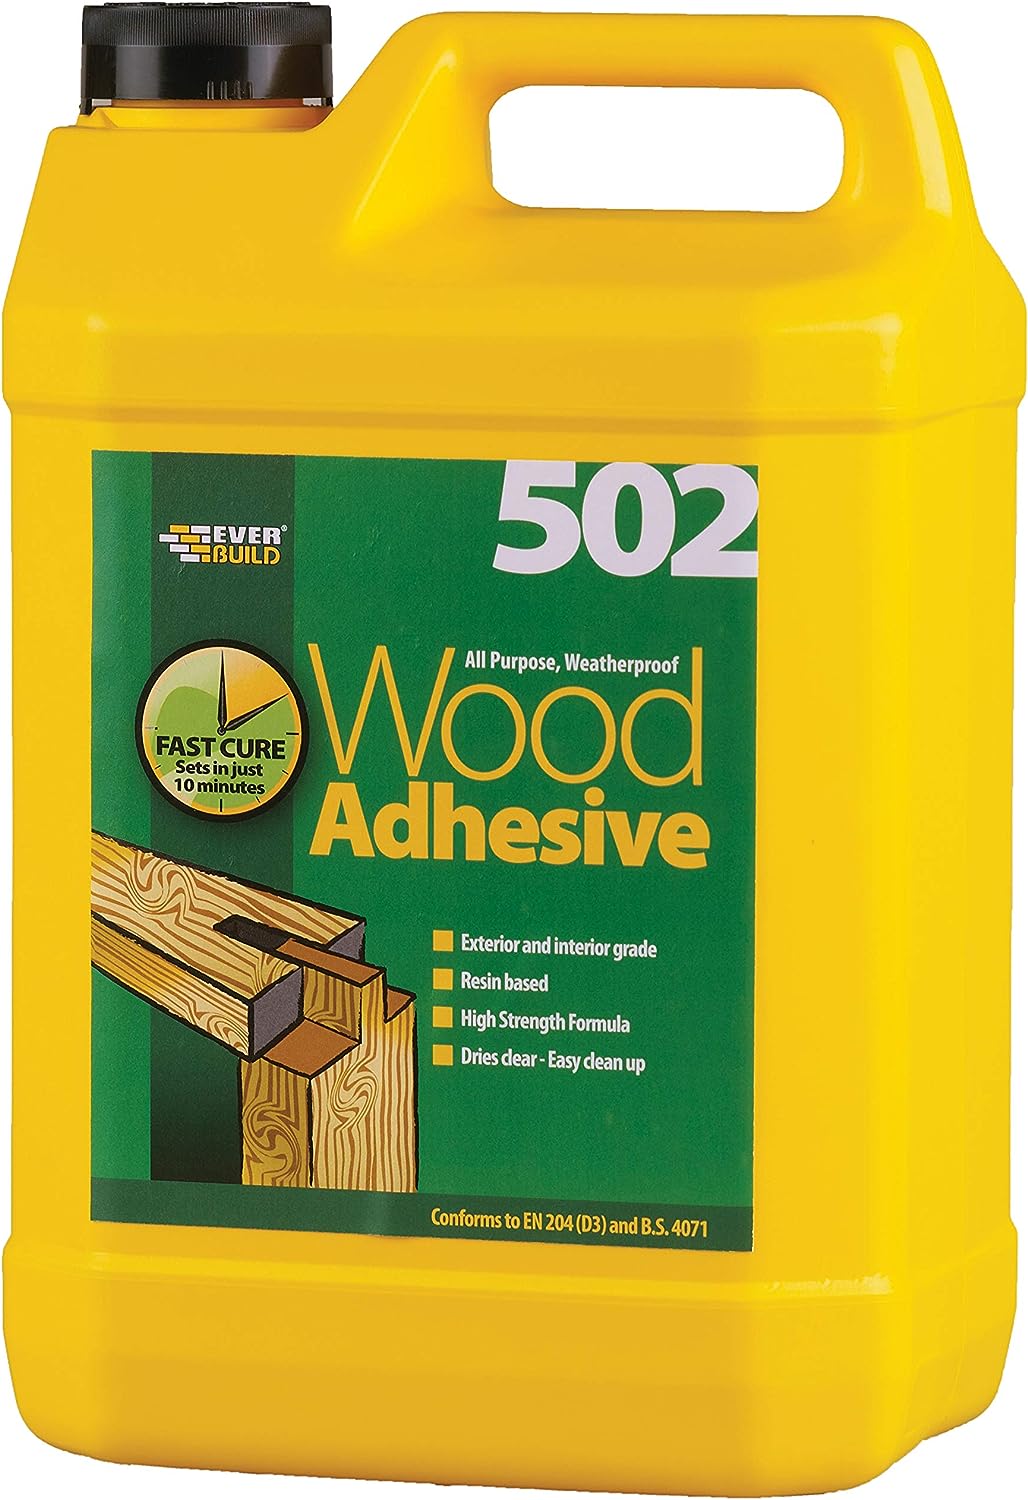 Everbuild 502 All Purpose Weatherproof Wood Adhesive, 5 Litre